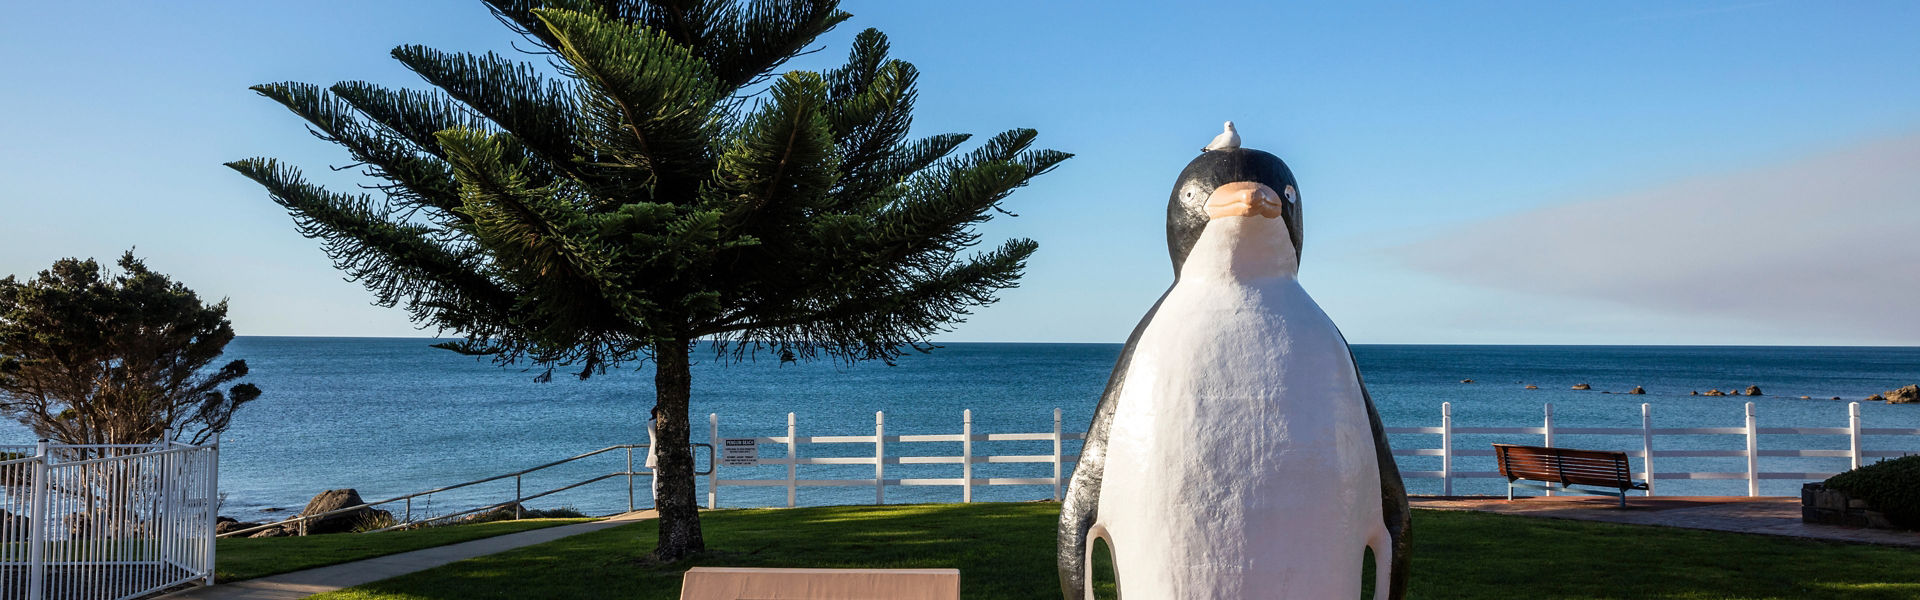 Photograph of a coastal scene in Tasmania with penguin statue and tree